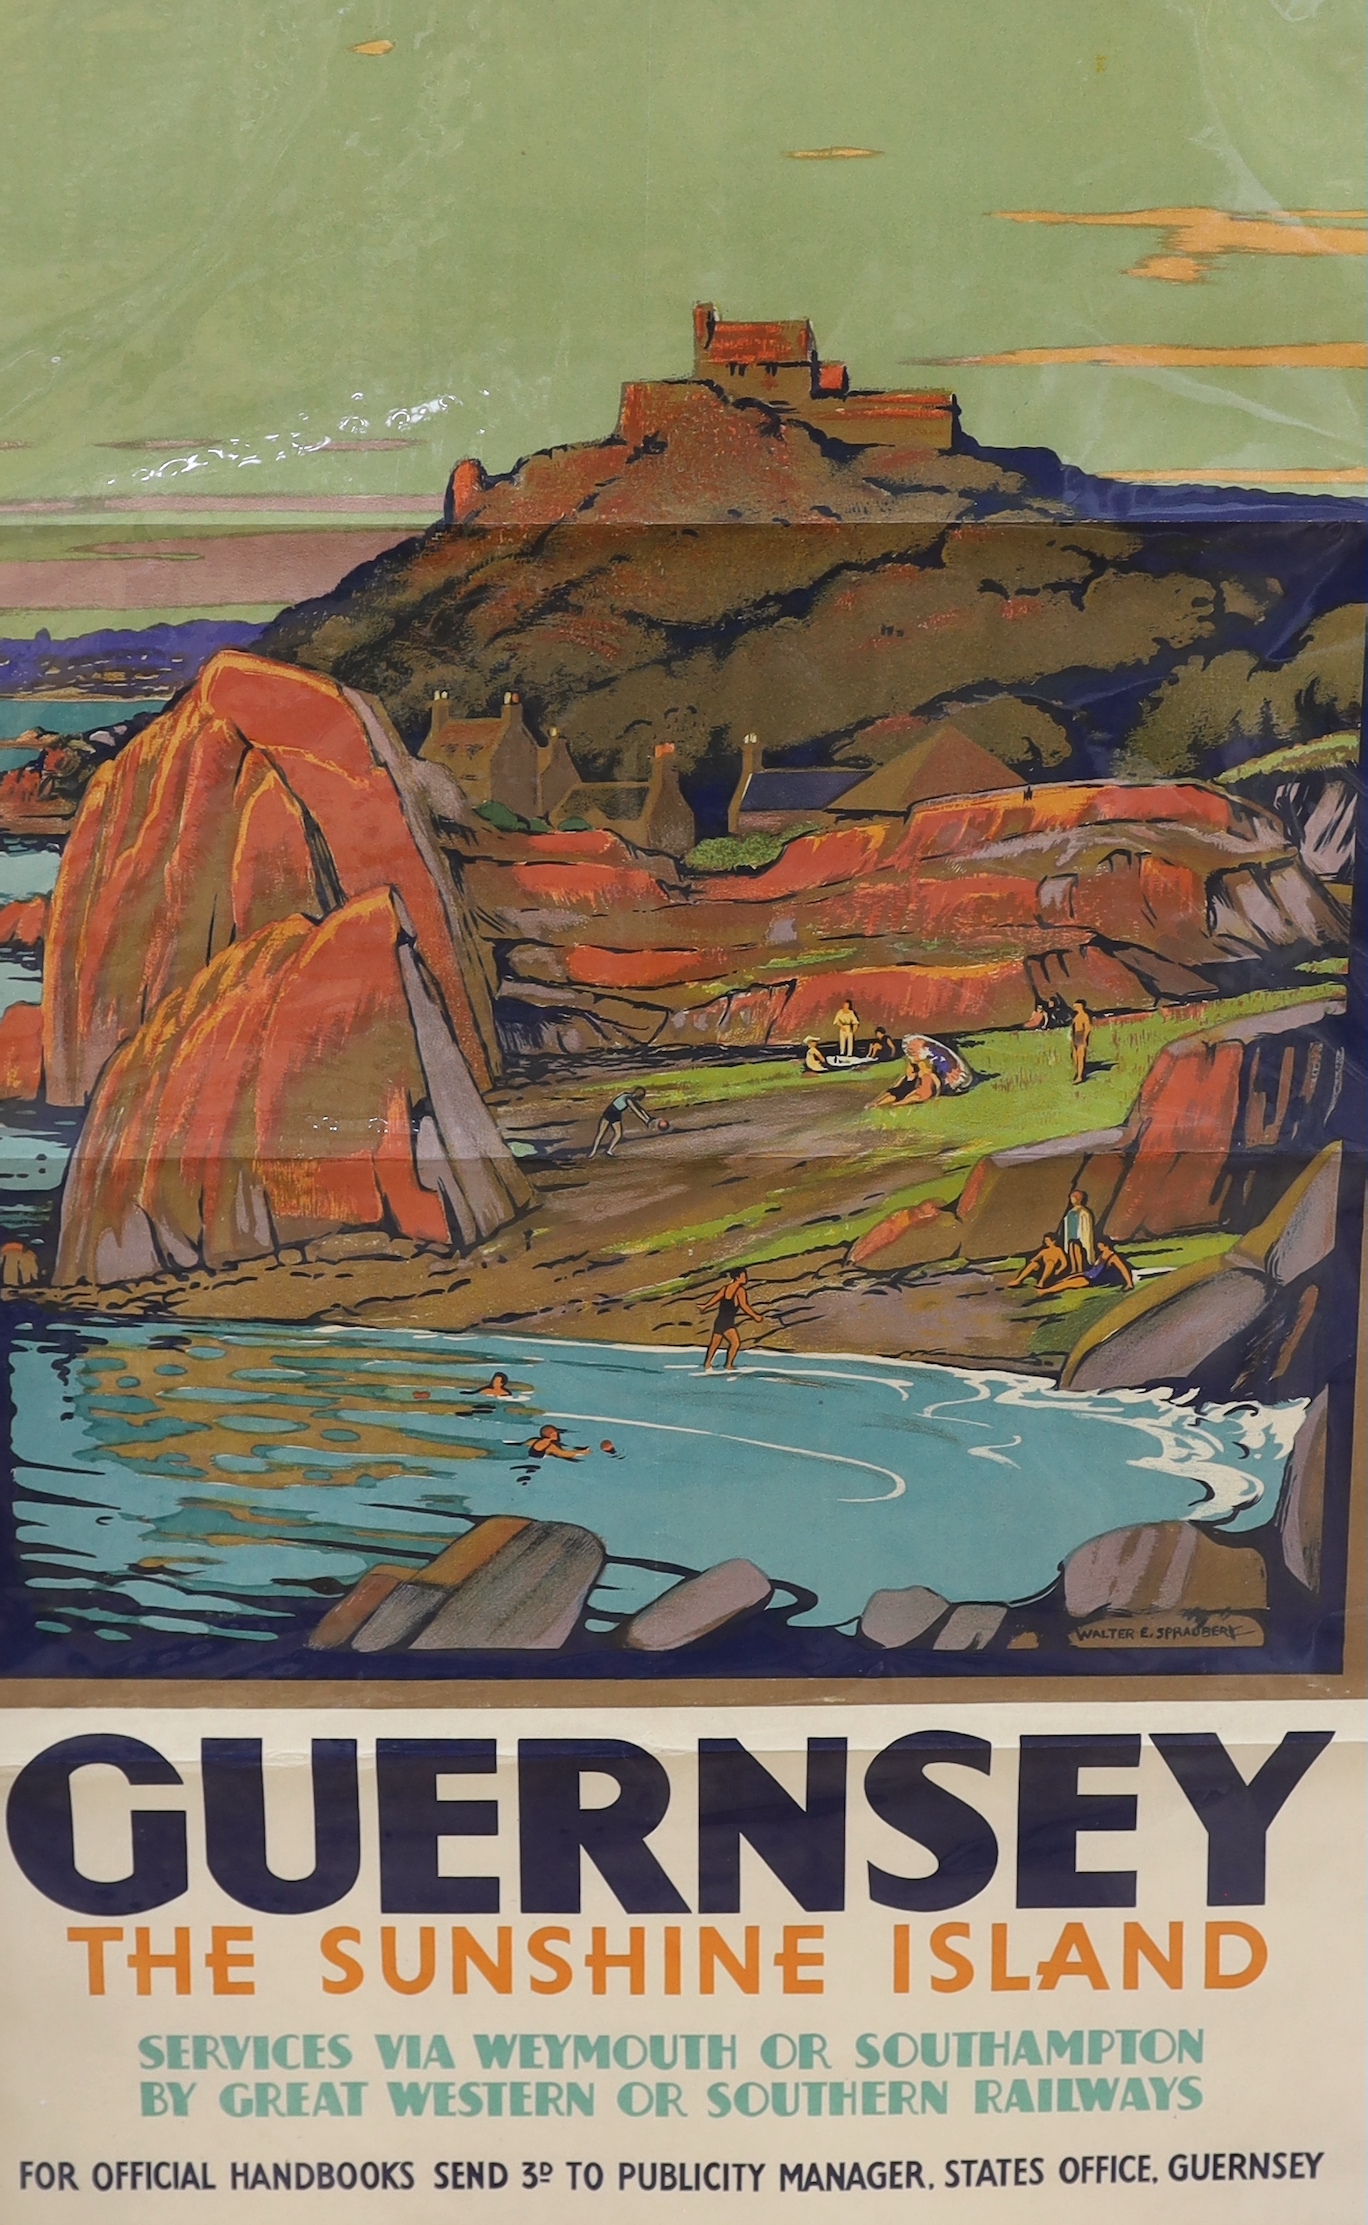 Walter Ernest Spradbery (1889-1969), lithographic railway poster, 'Guernsey - The Sunshine